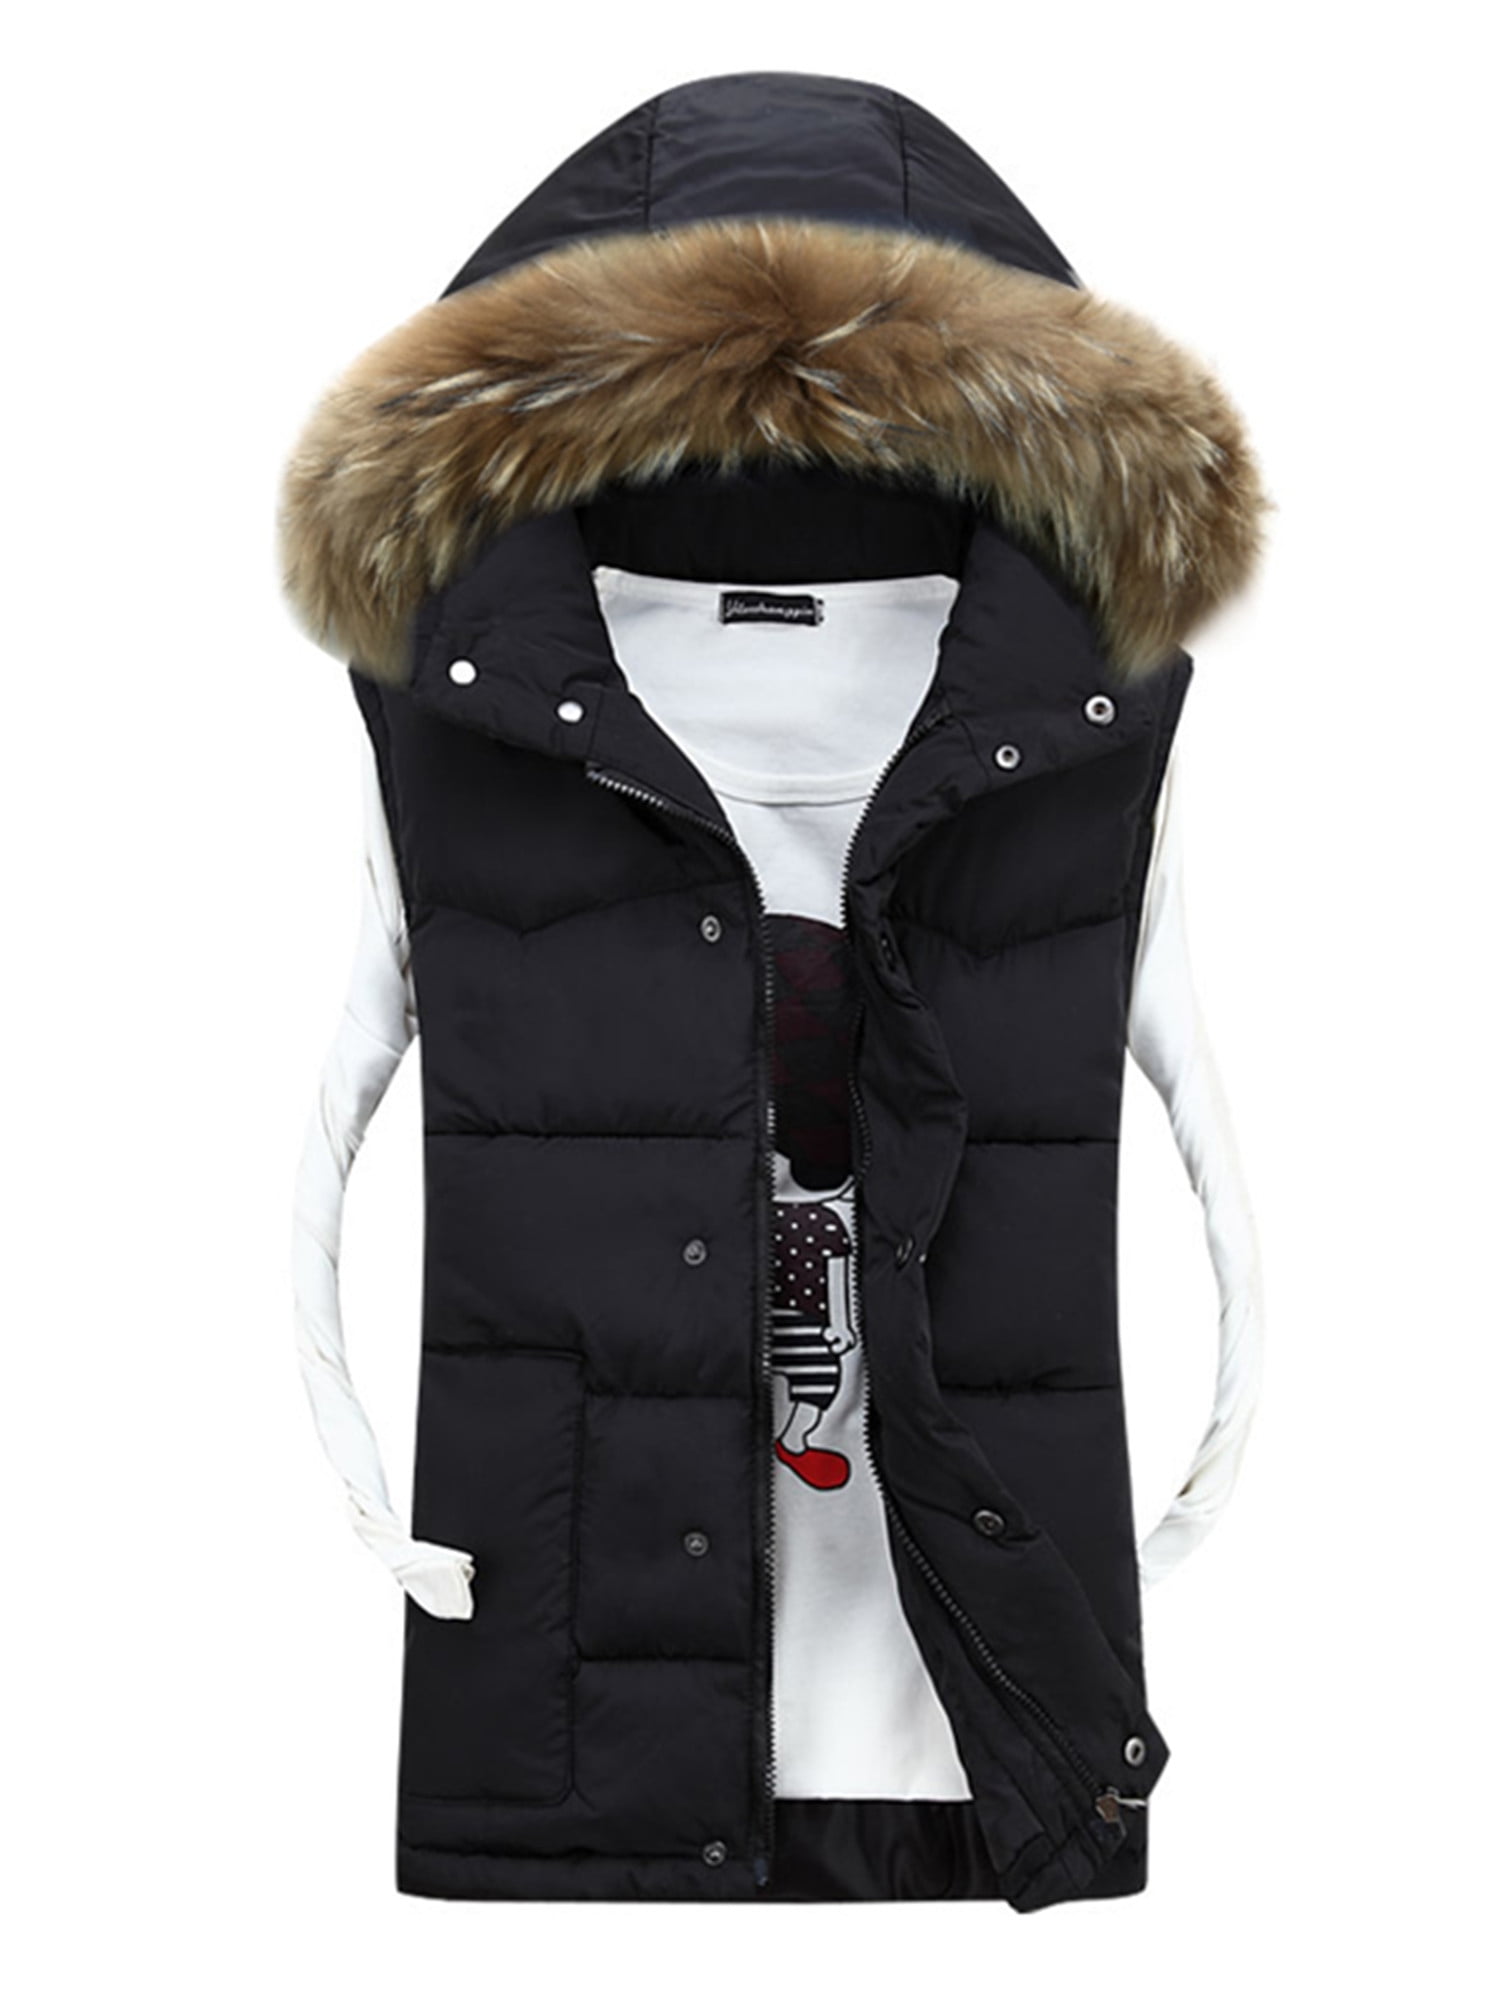 DISHANG Womens Winter Puffer Vest Zip Up Sleeveless Jacket Outdoor Sports Insulated Gilets